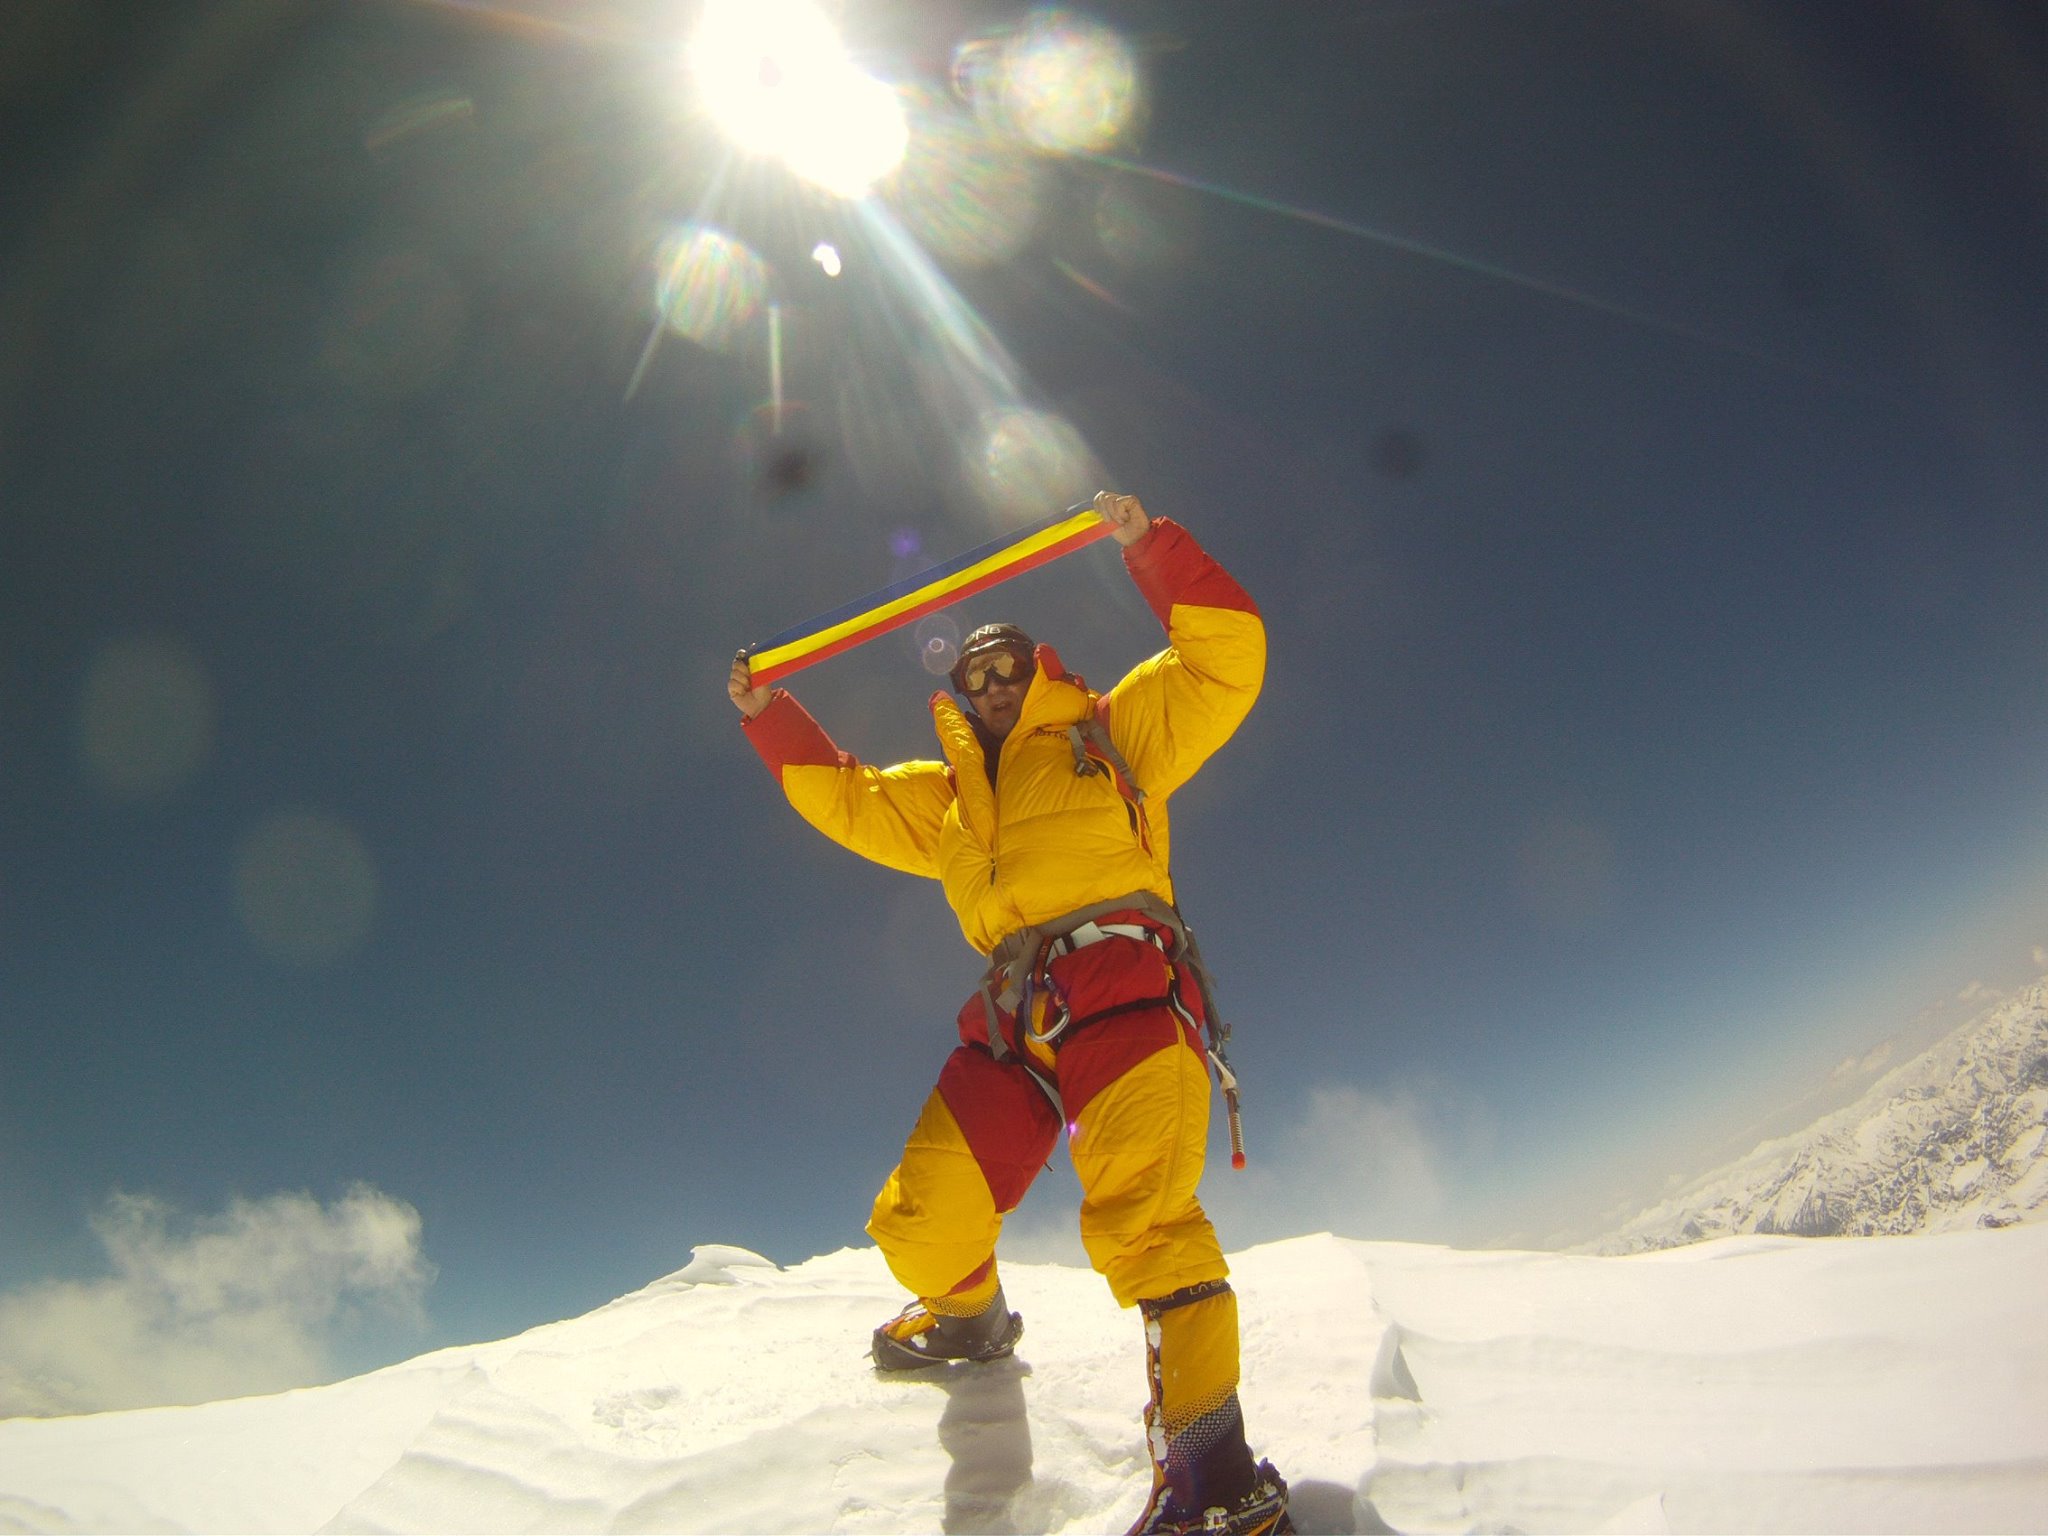 Horia Colibasanu on Everest